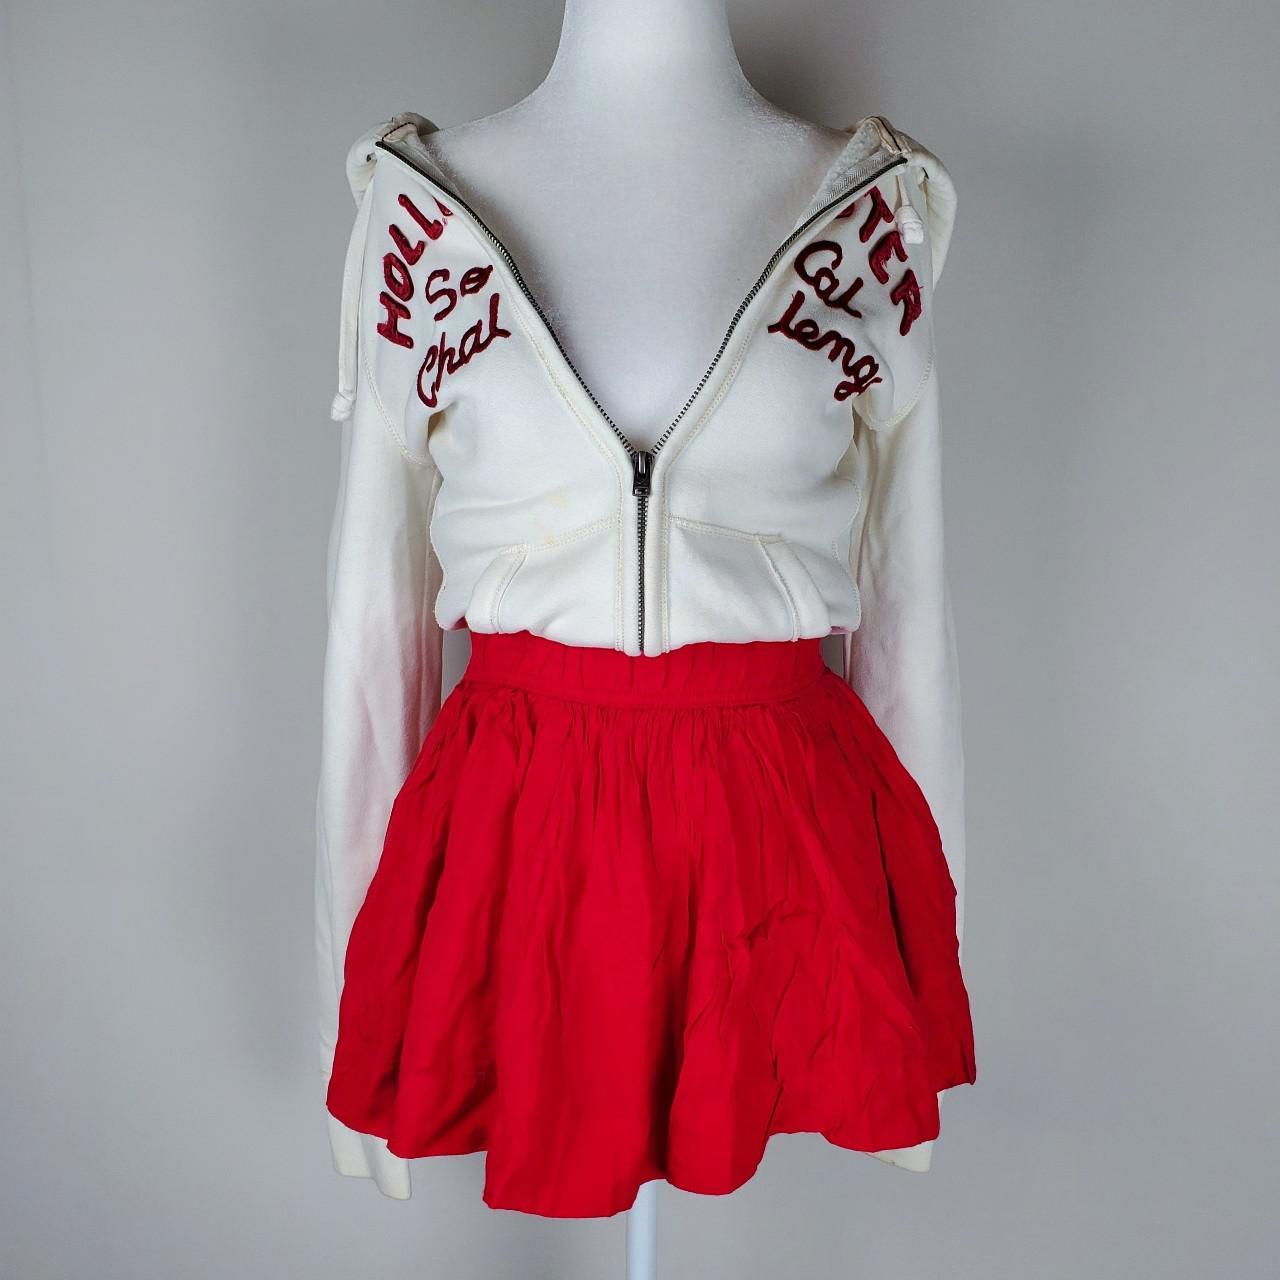 Product Image 1 - Red Miniskirt | Red Schoolgirl